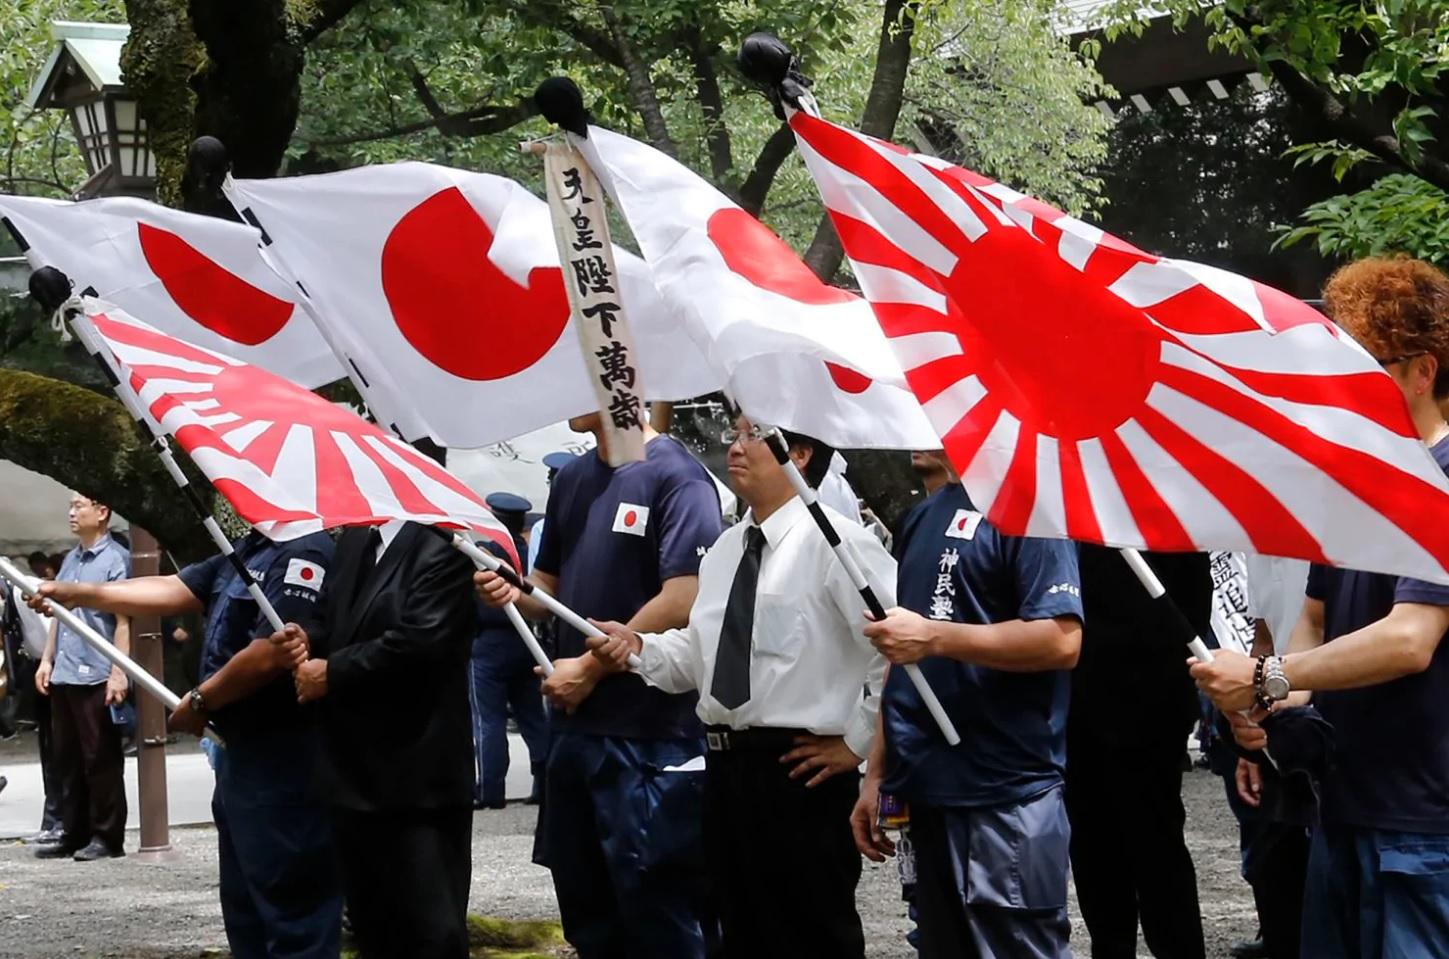 Japan: Sporna zastava, južnokorejanci je porede s nacističkim simbolima - Avaz